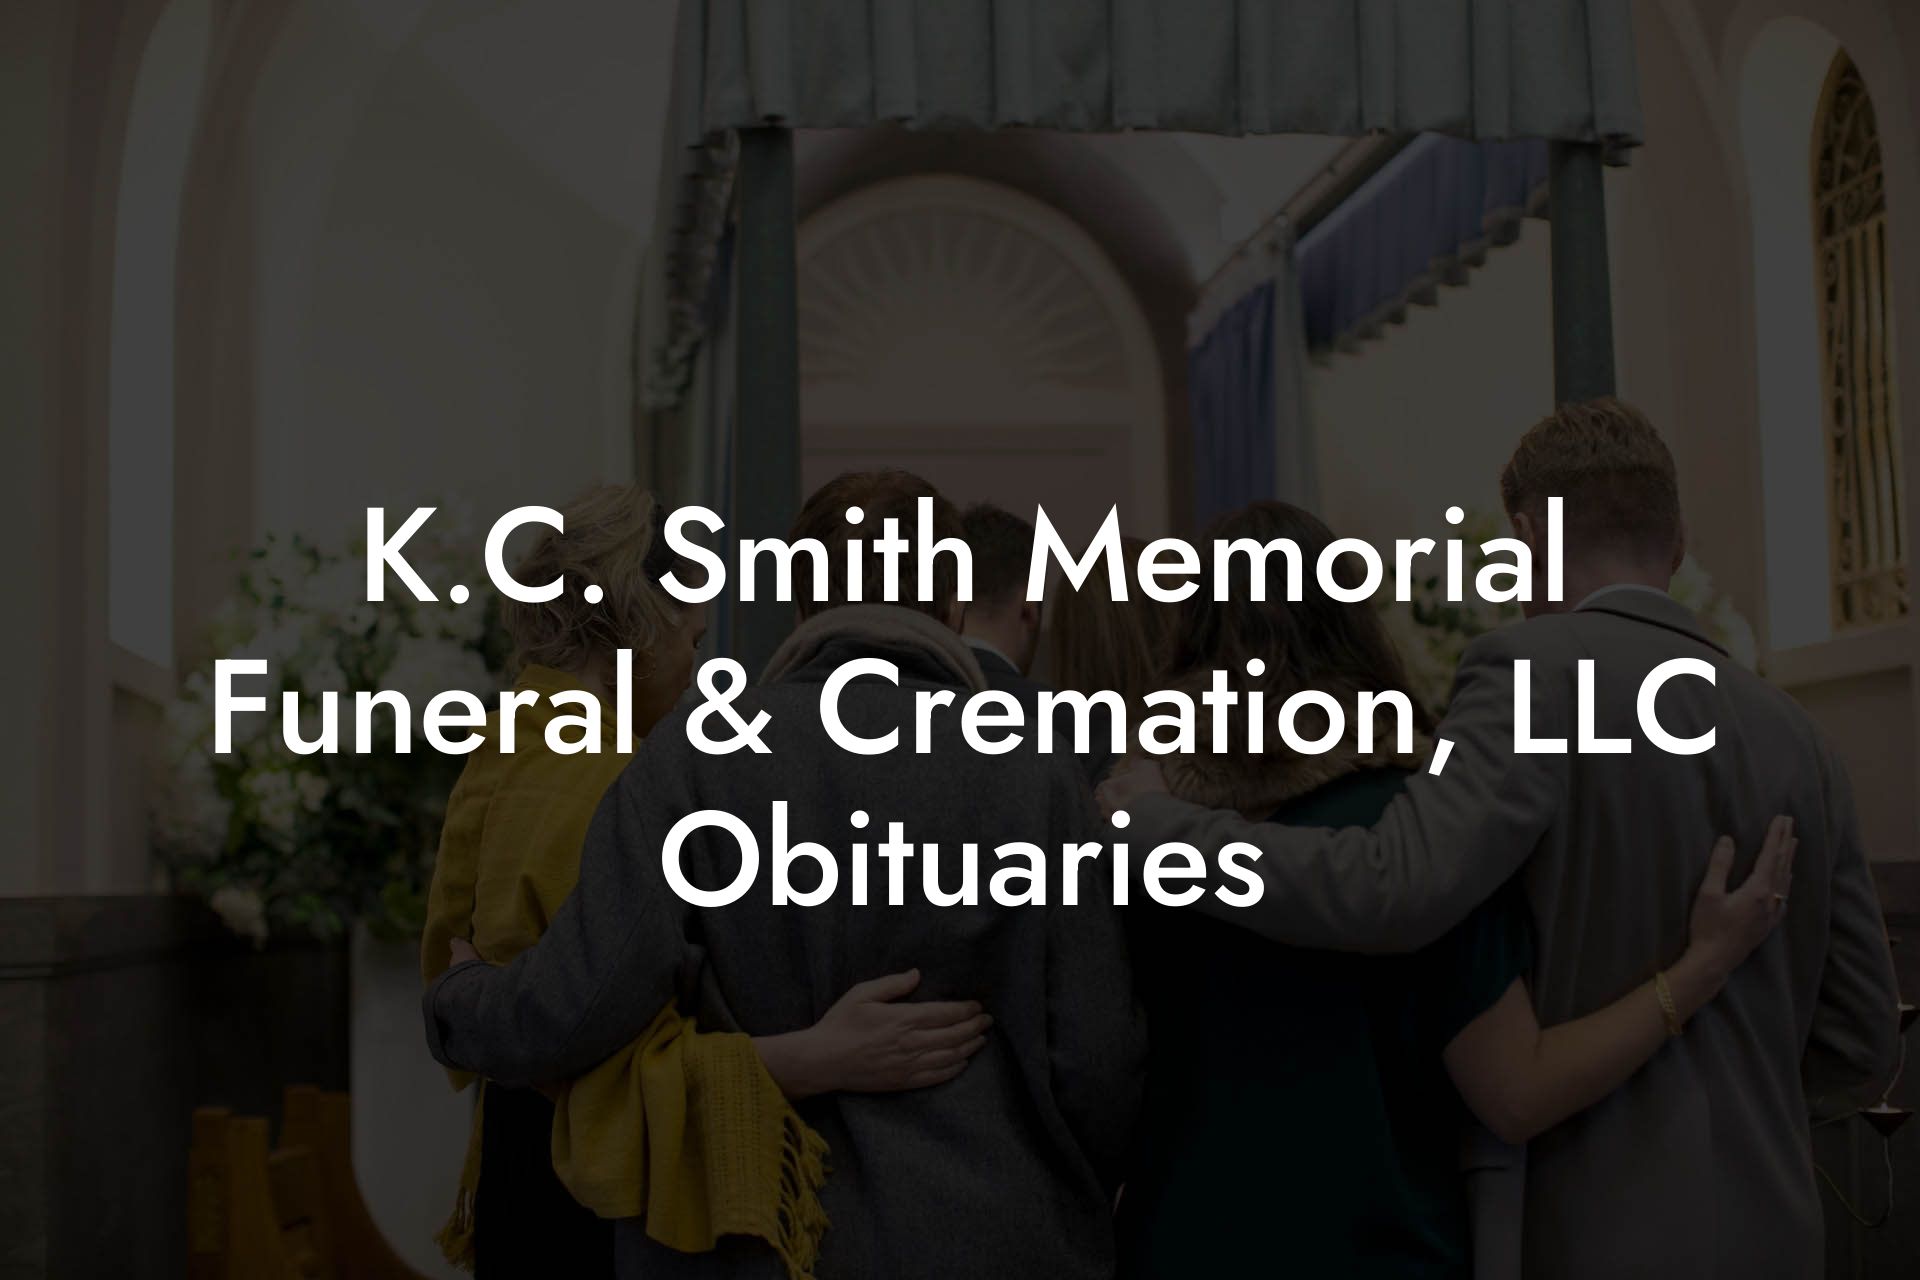 K.C. Smith Memorial Funeral & Cremation, LLC Obituaries